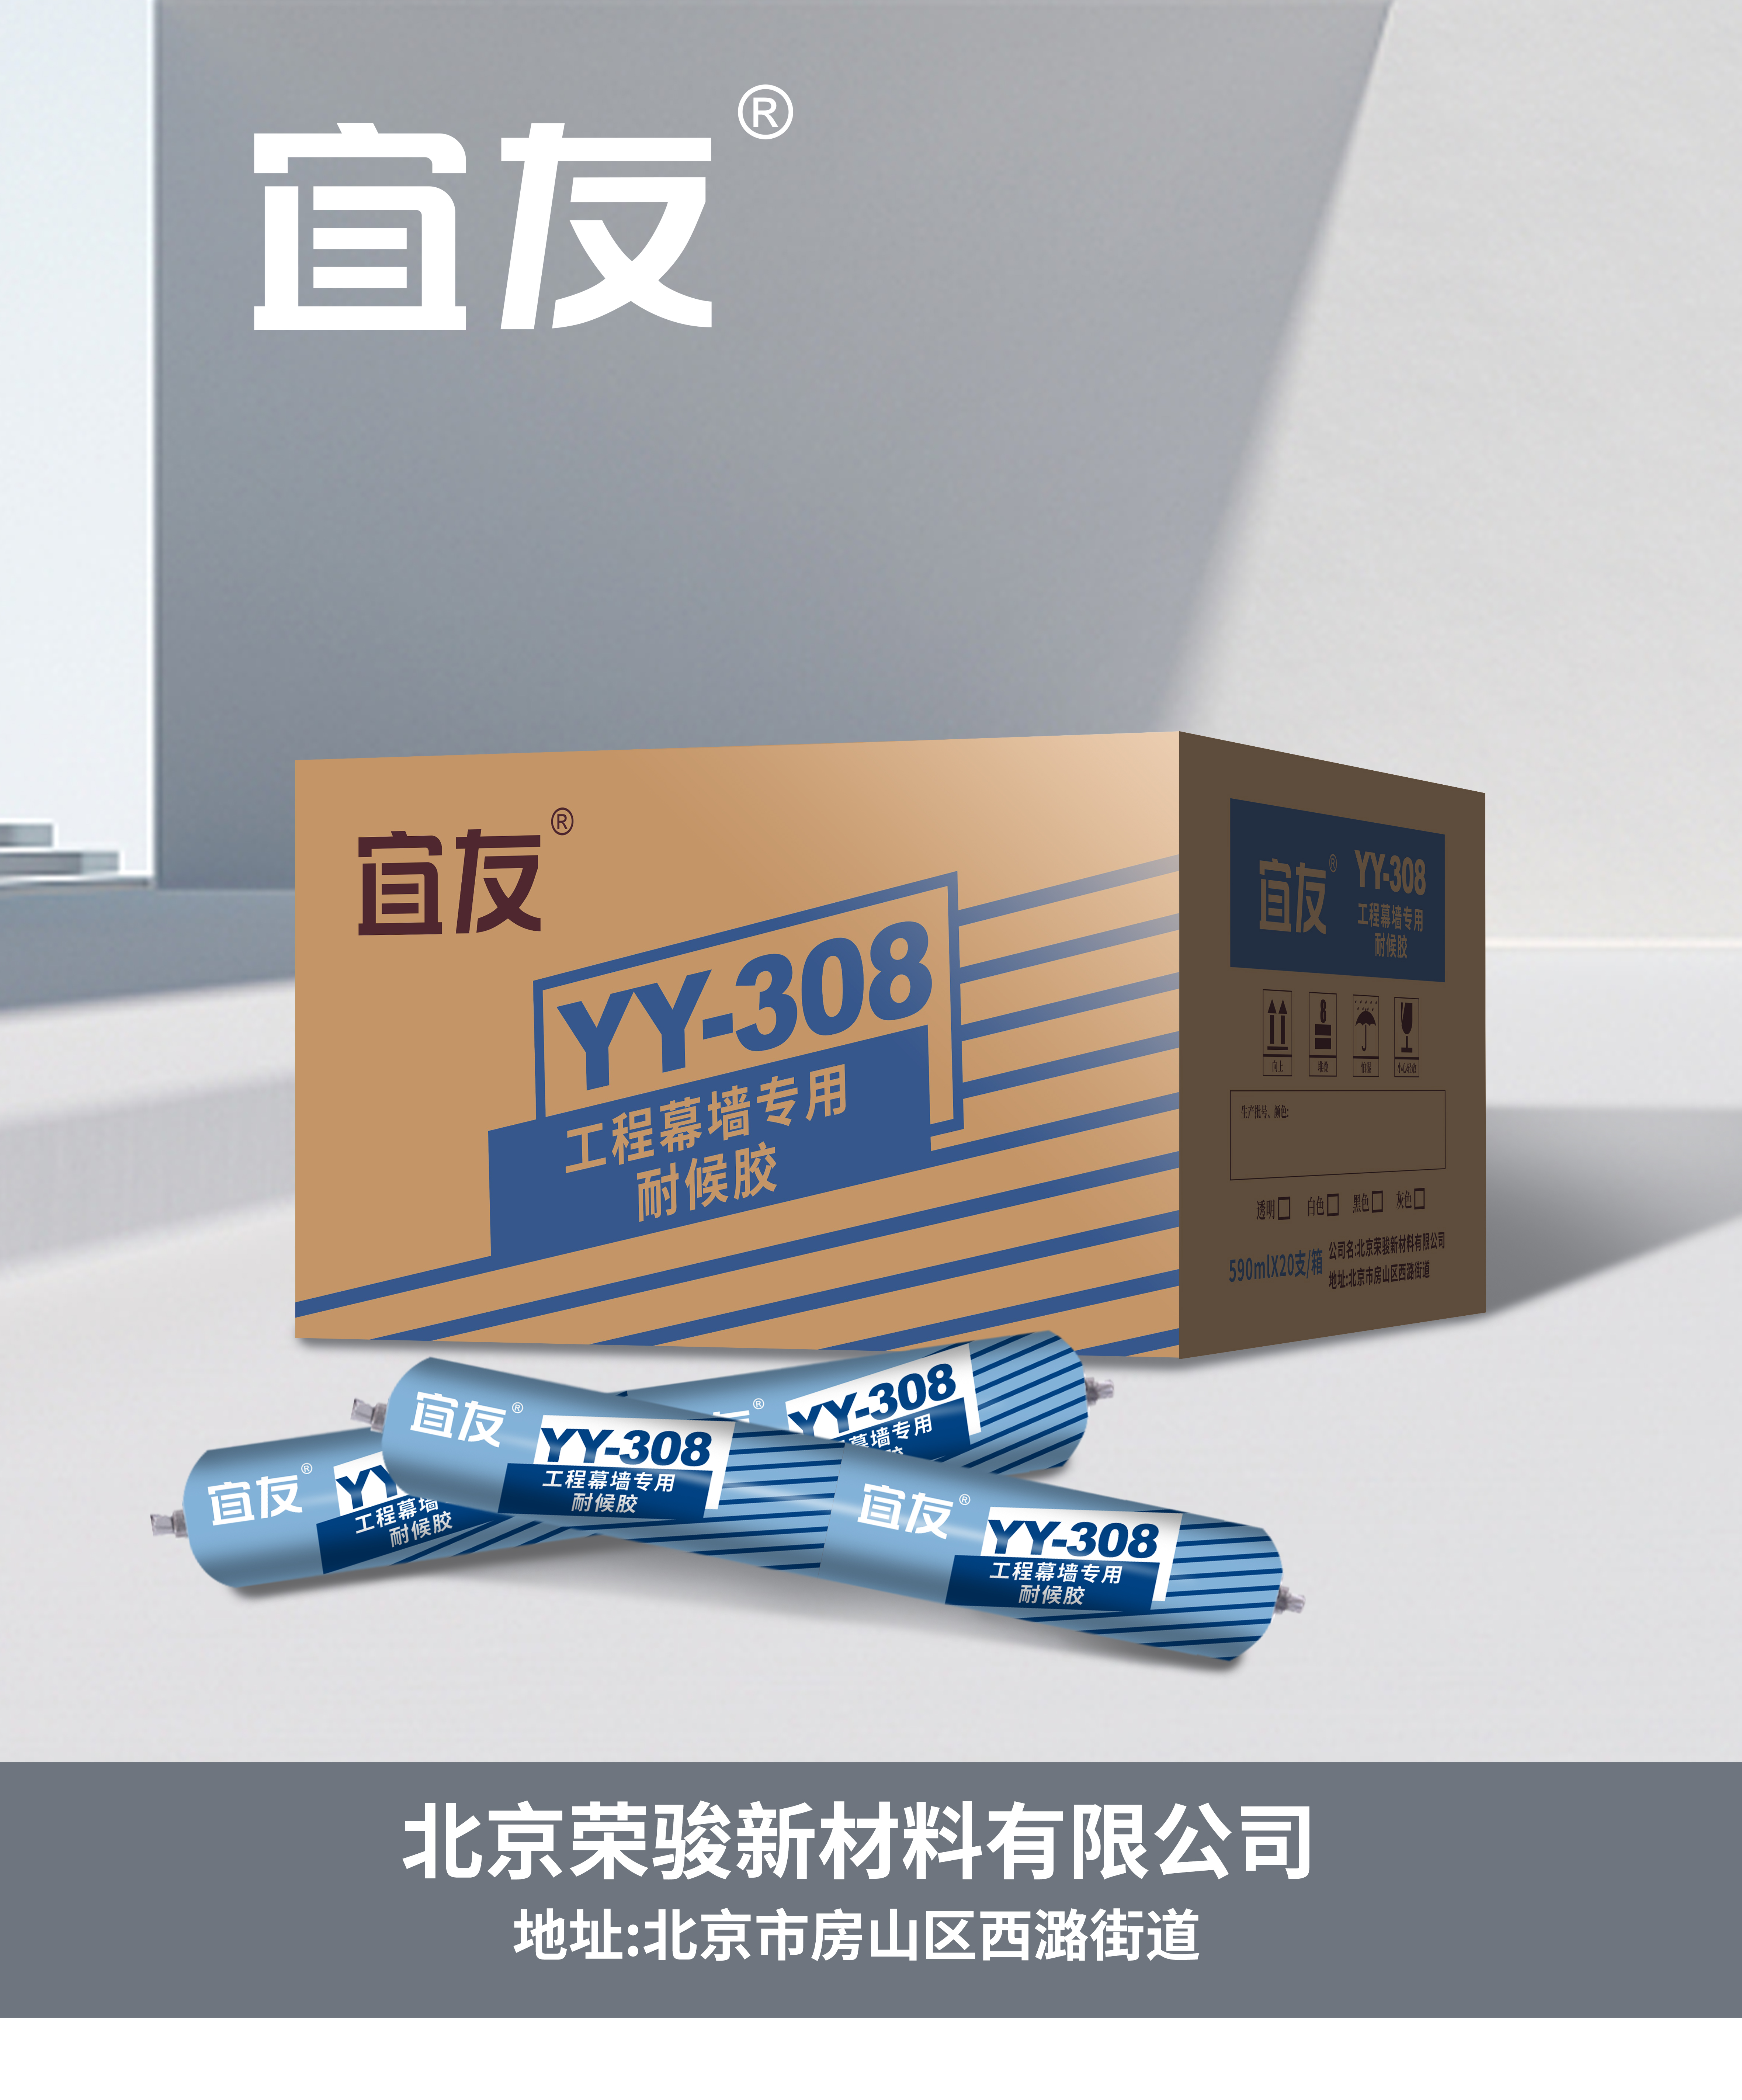 YY-308工程幕墻專用耐候膠